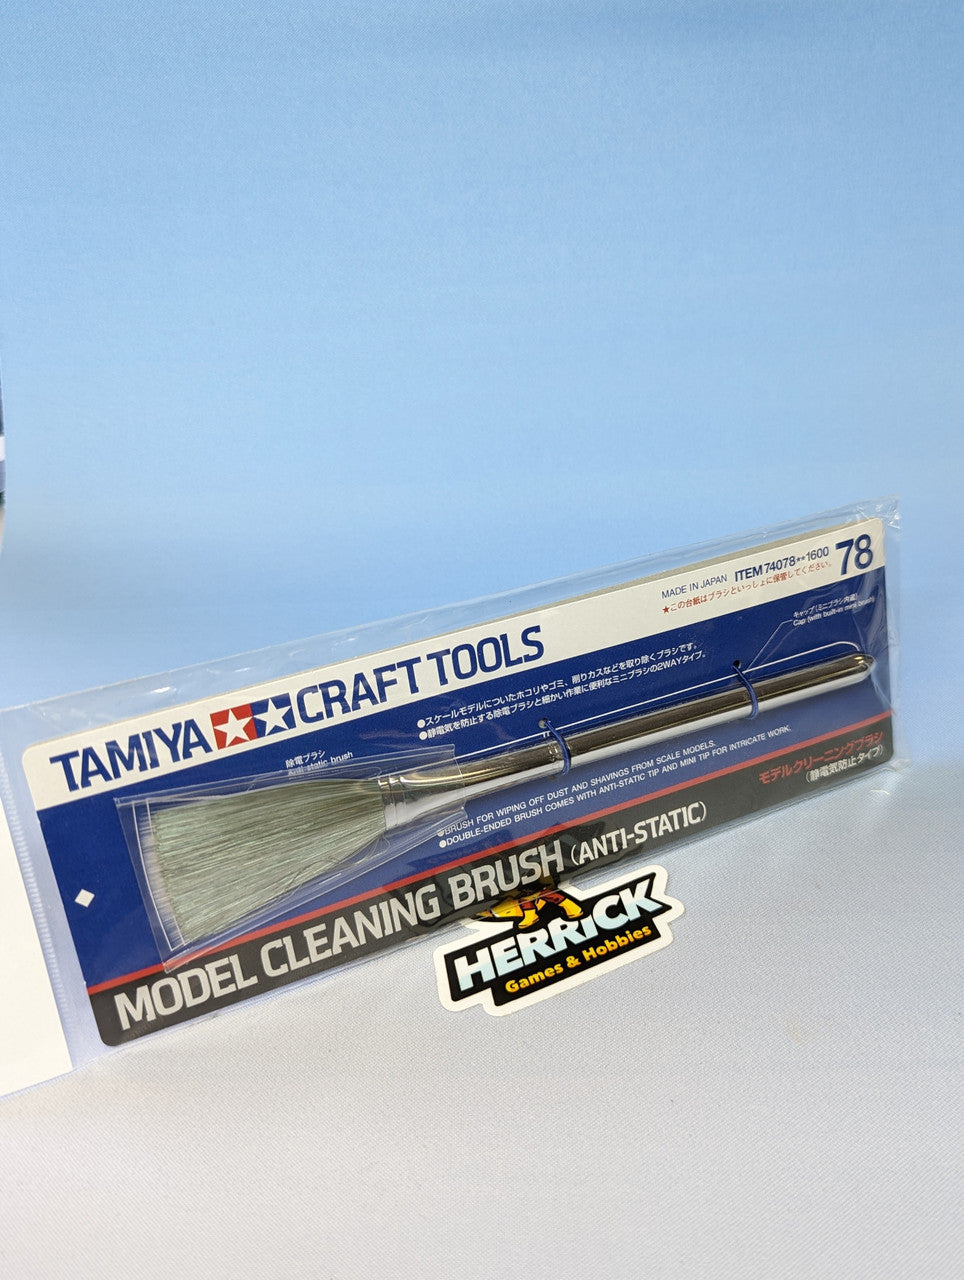 Tamiya: Model Cleaning Brush (Anti-Static)